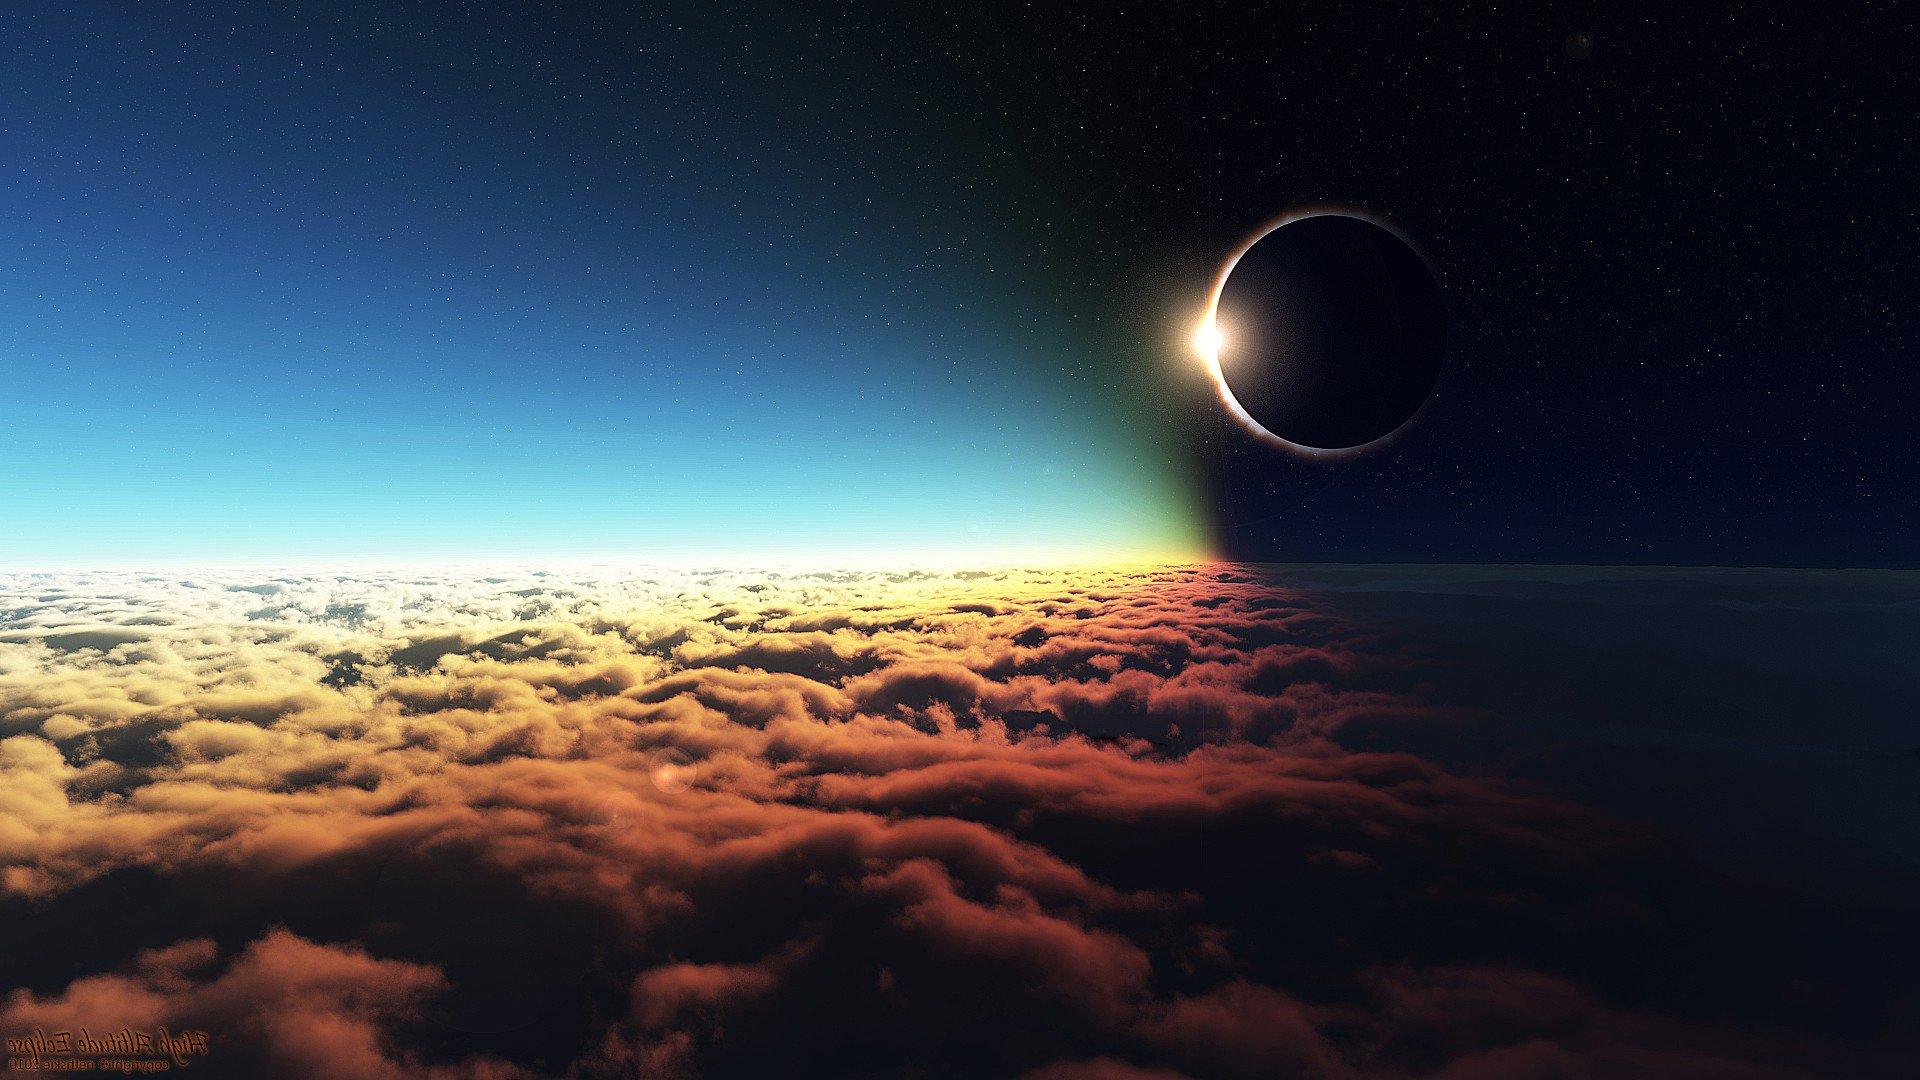 Eclipse Altitude, HD Digital Universe, 4k Wallpaper, Image